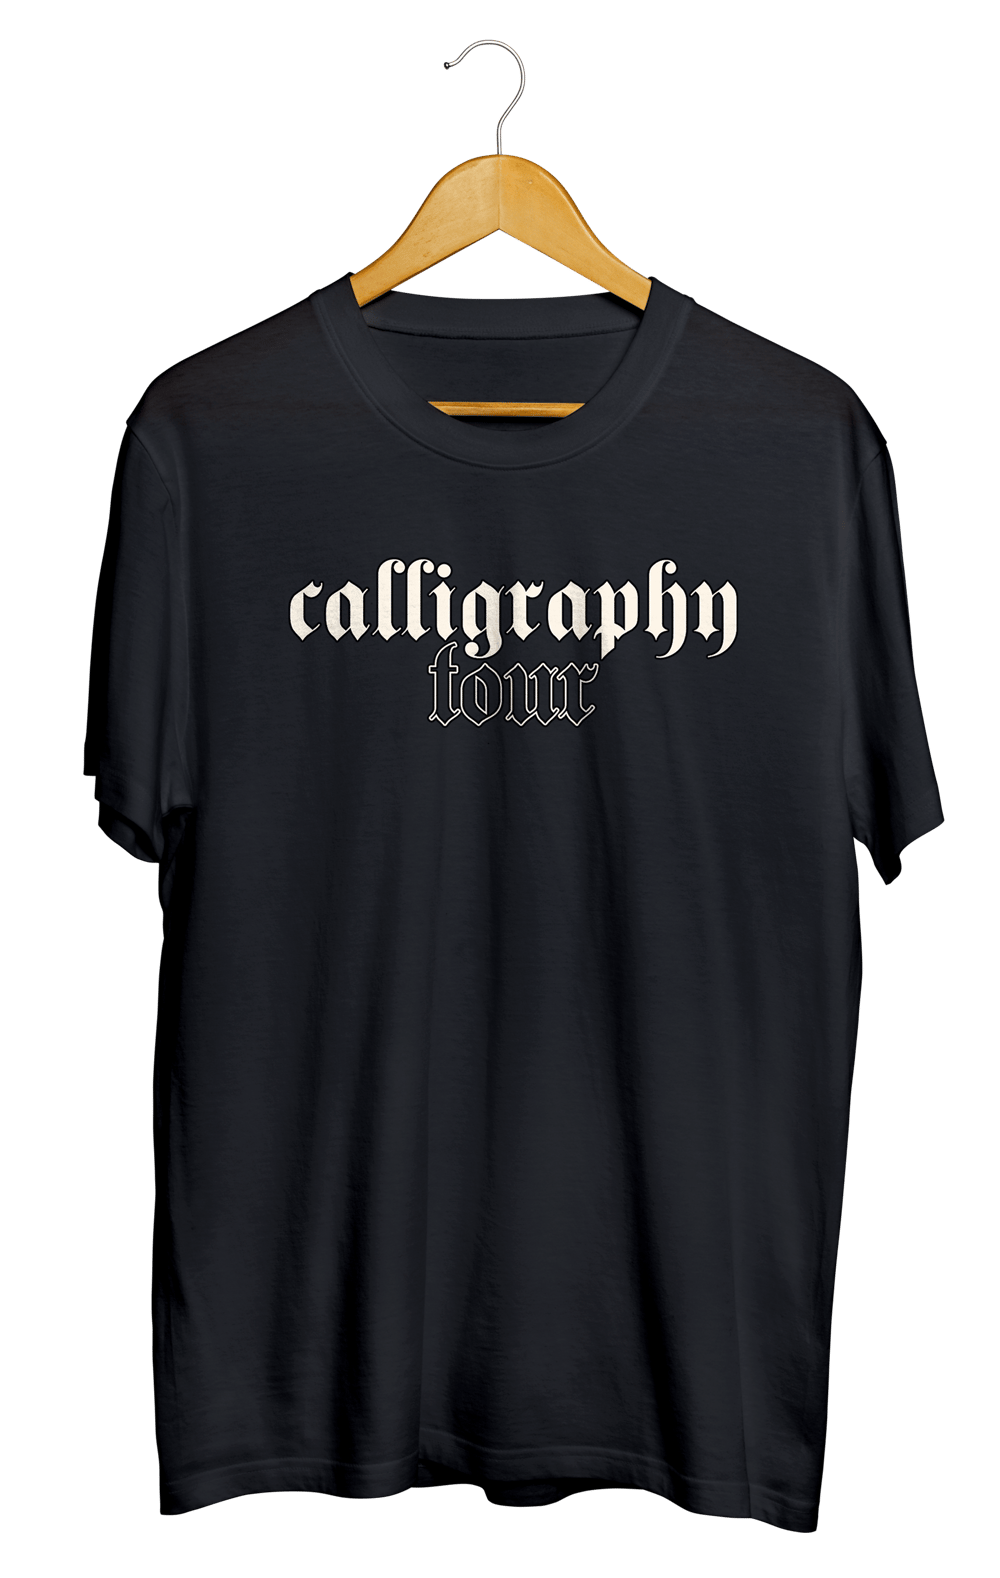 Caskey Caligraphy Tour Merch in Black